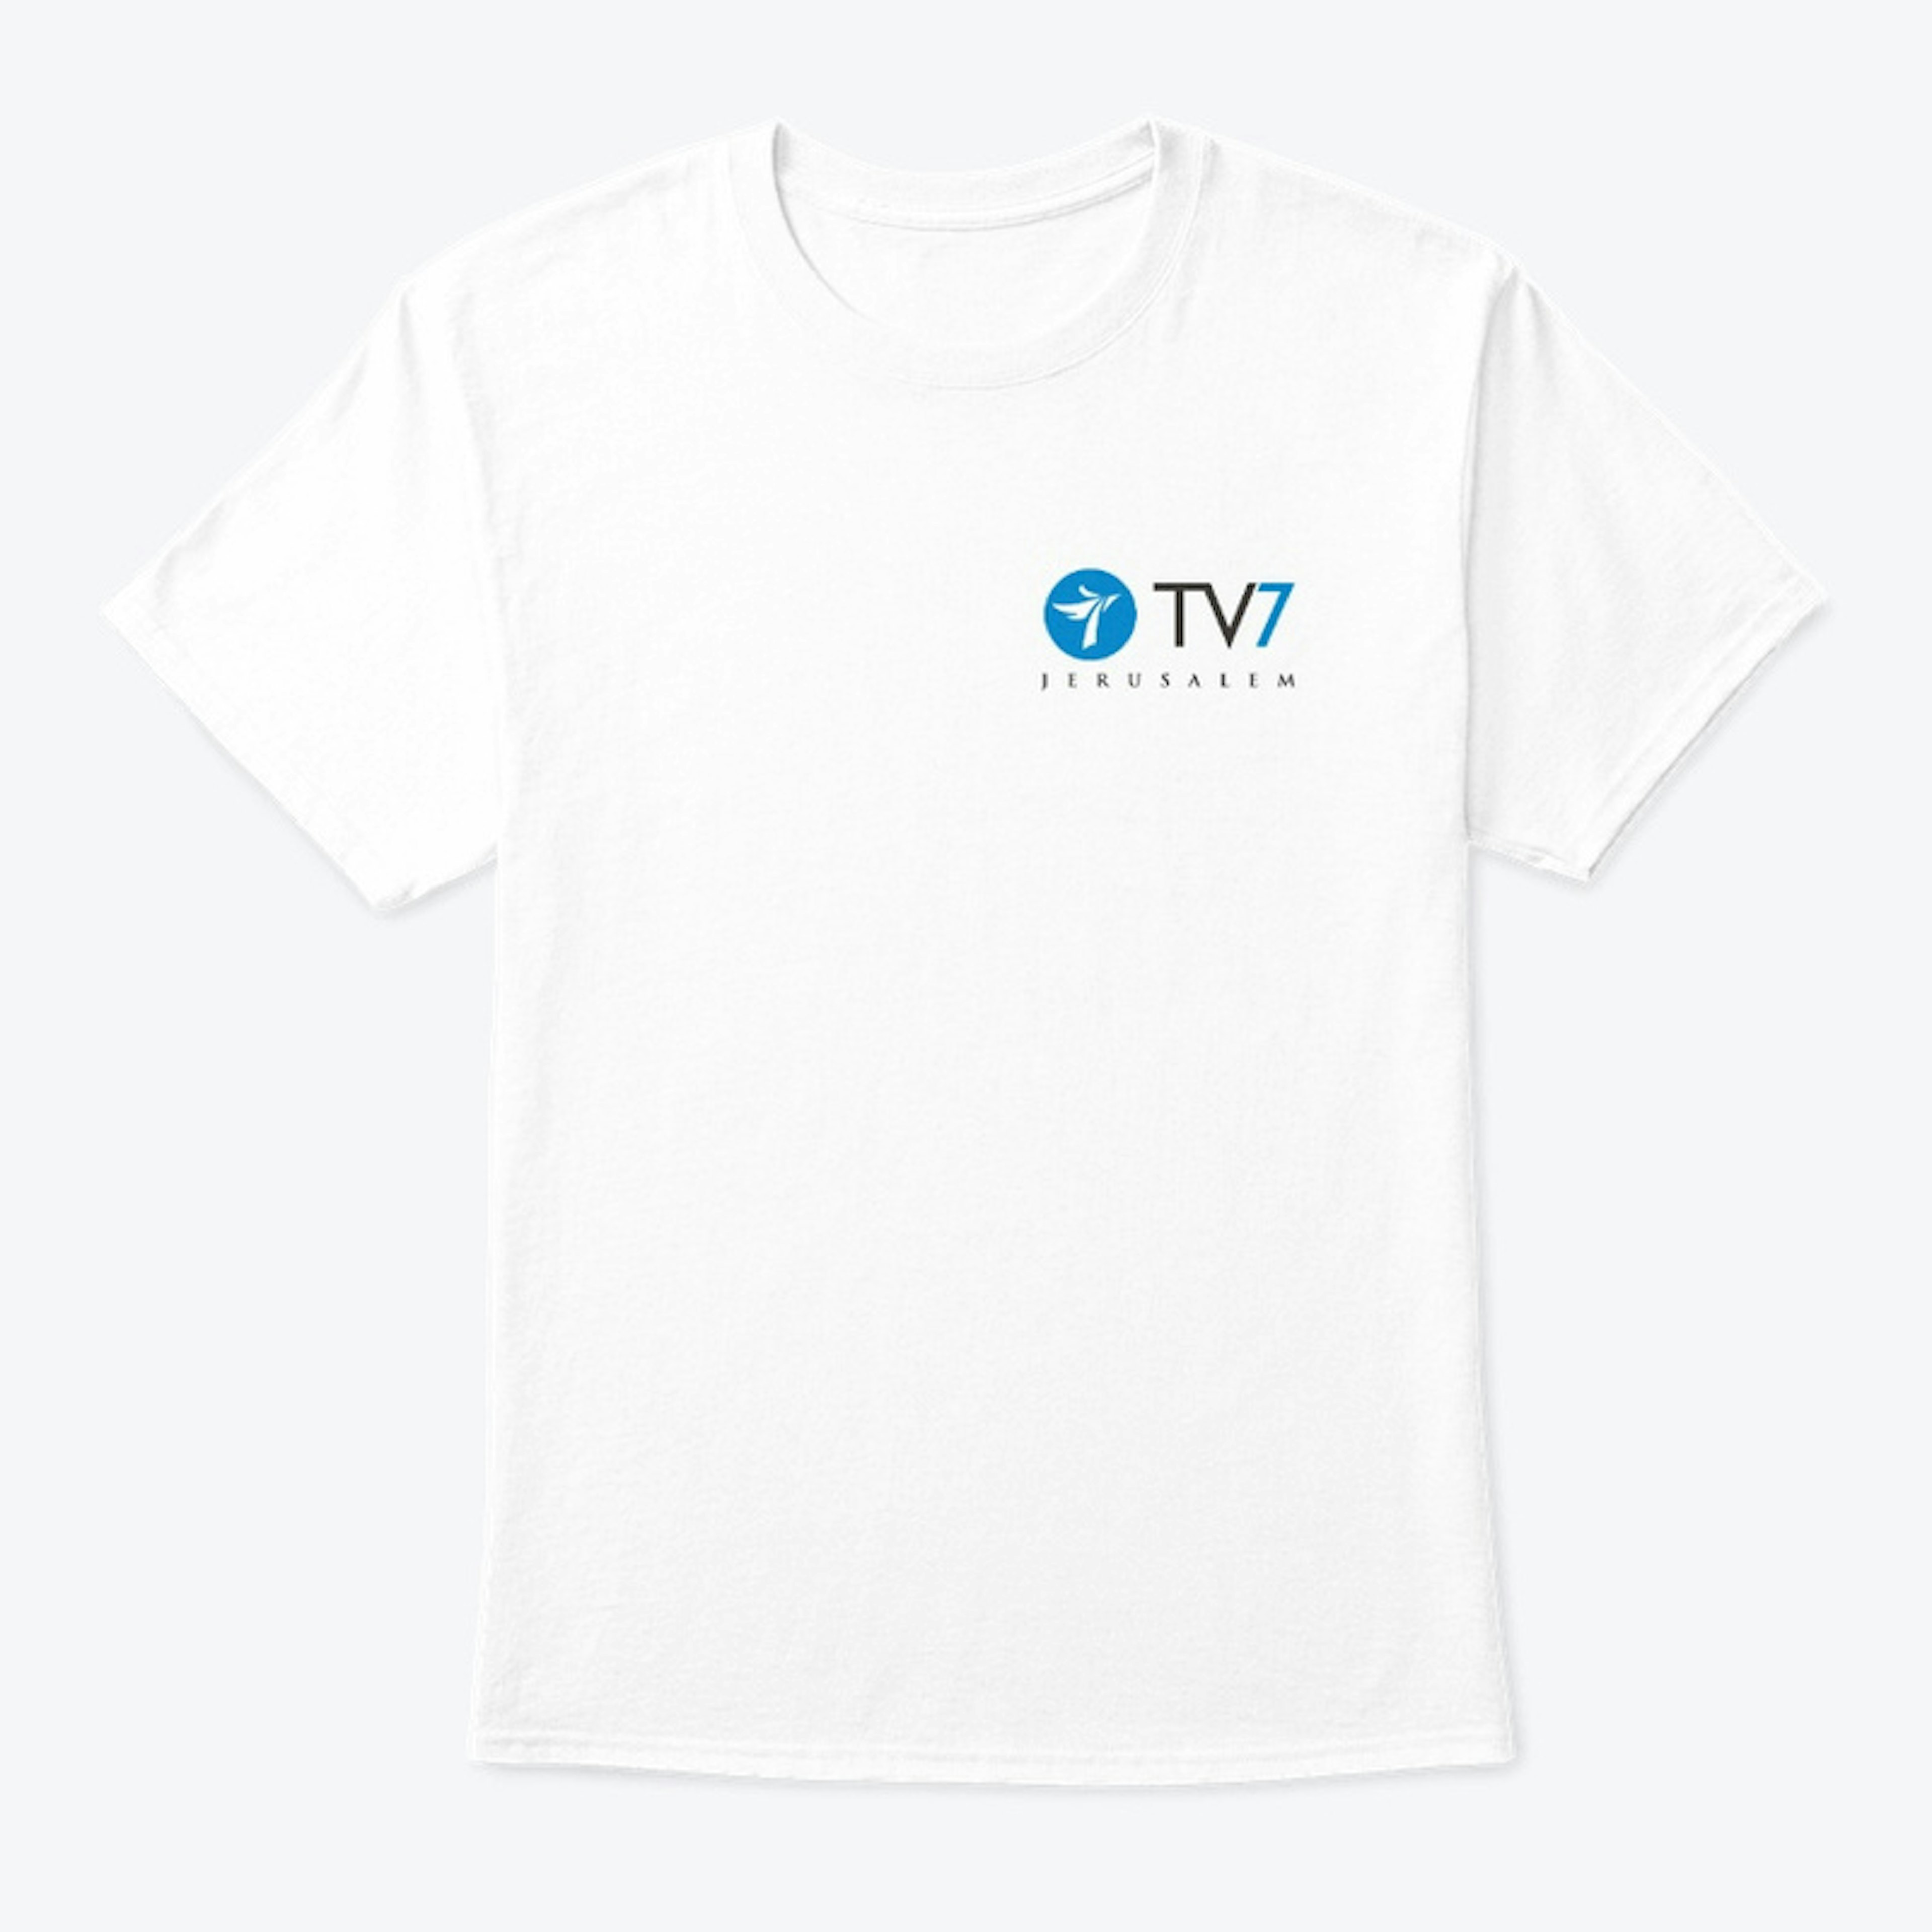 TV7 Israel News T-Shirt